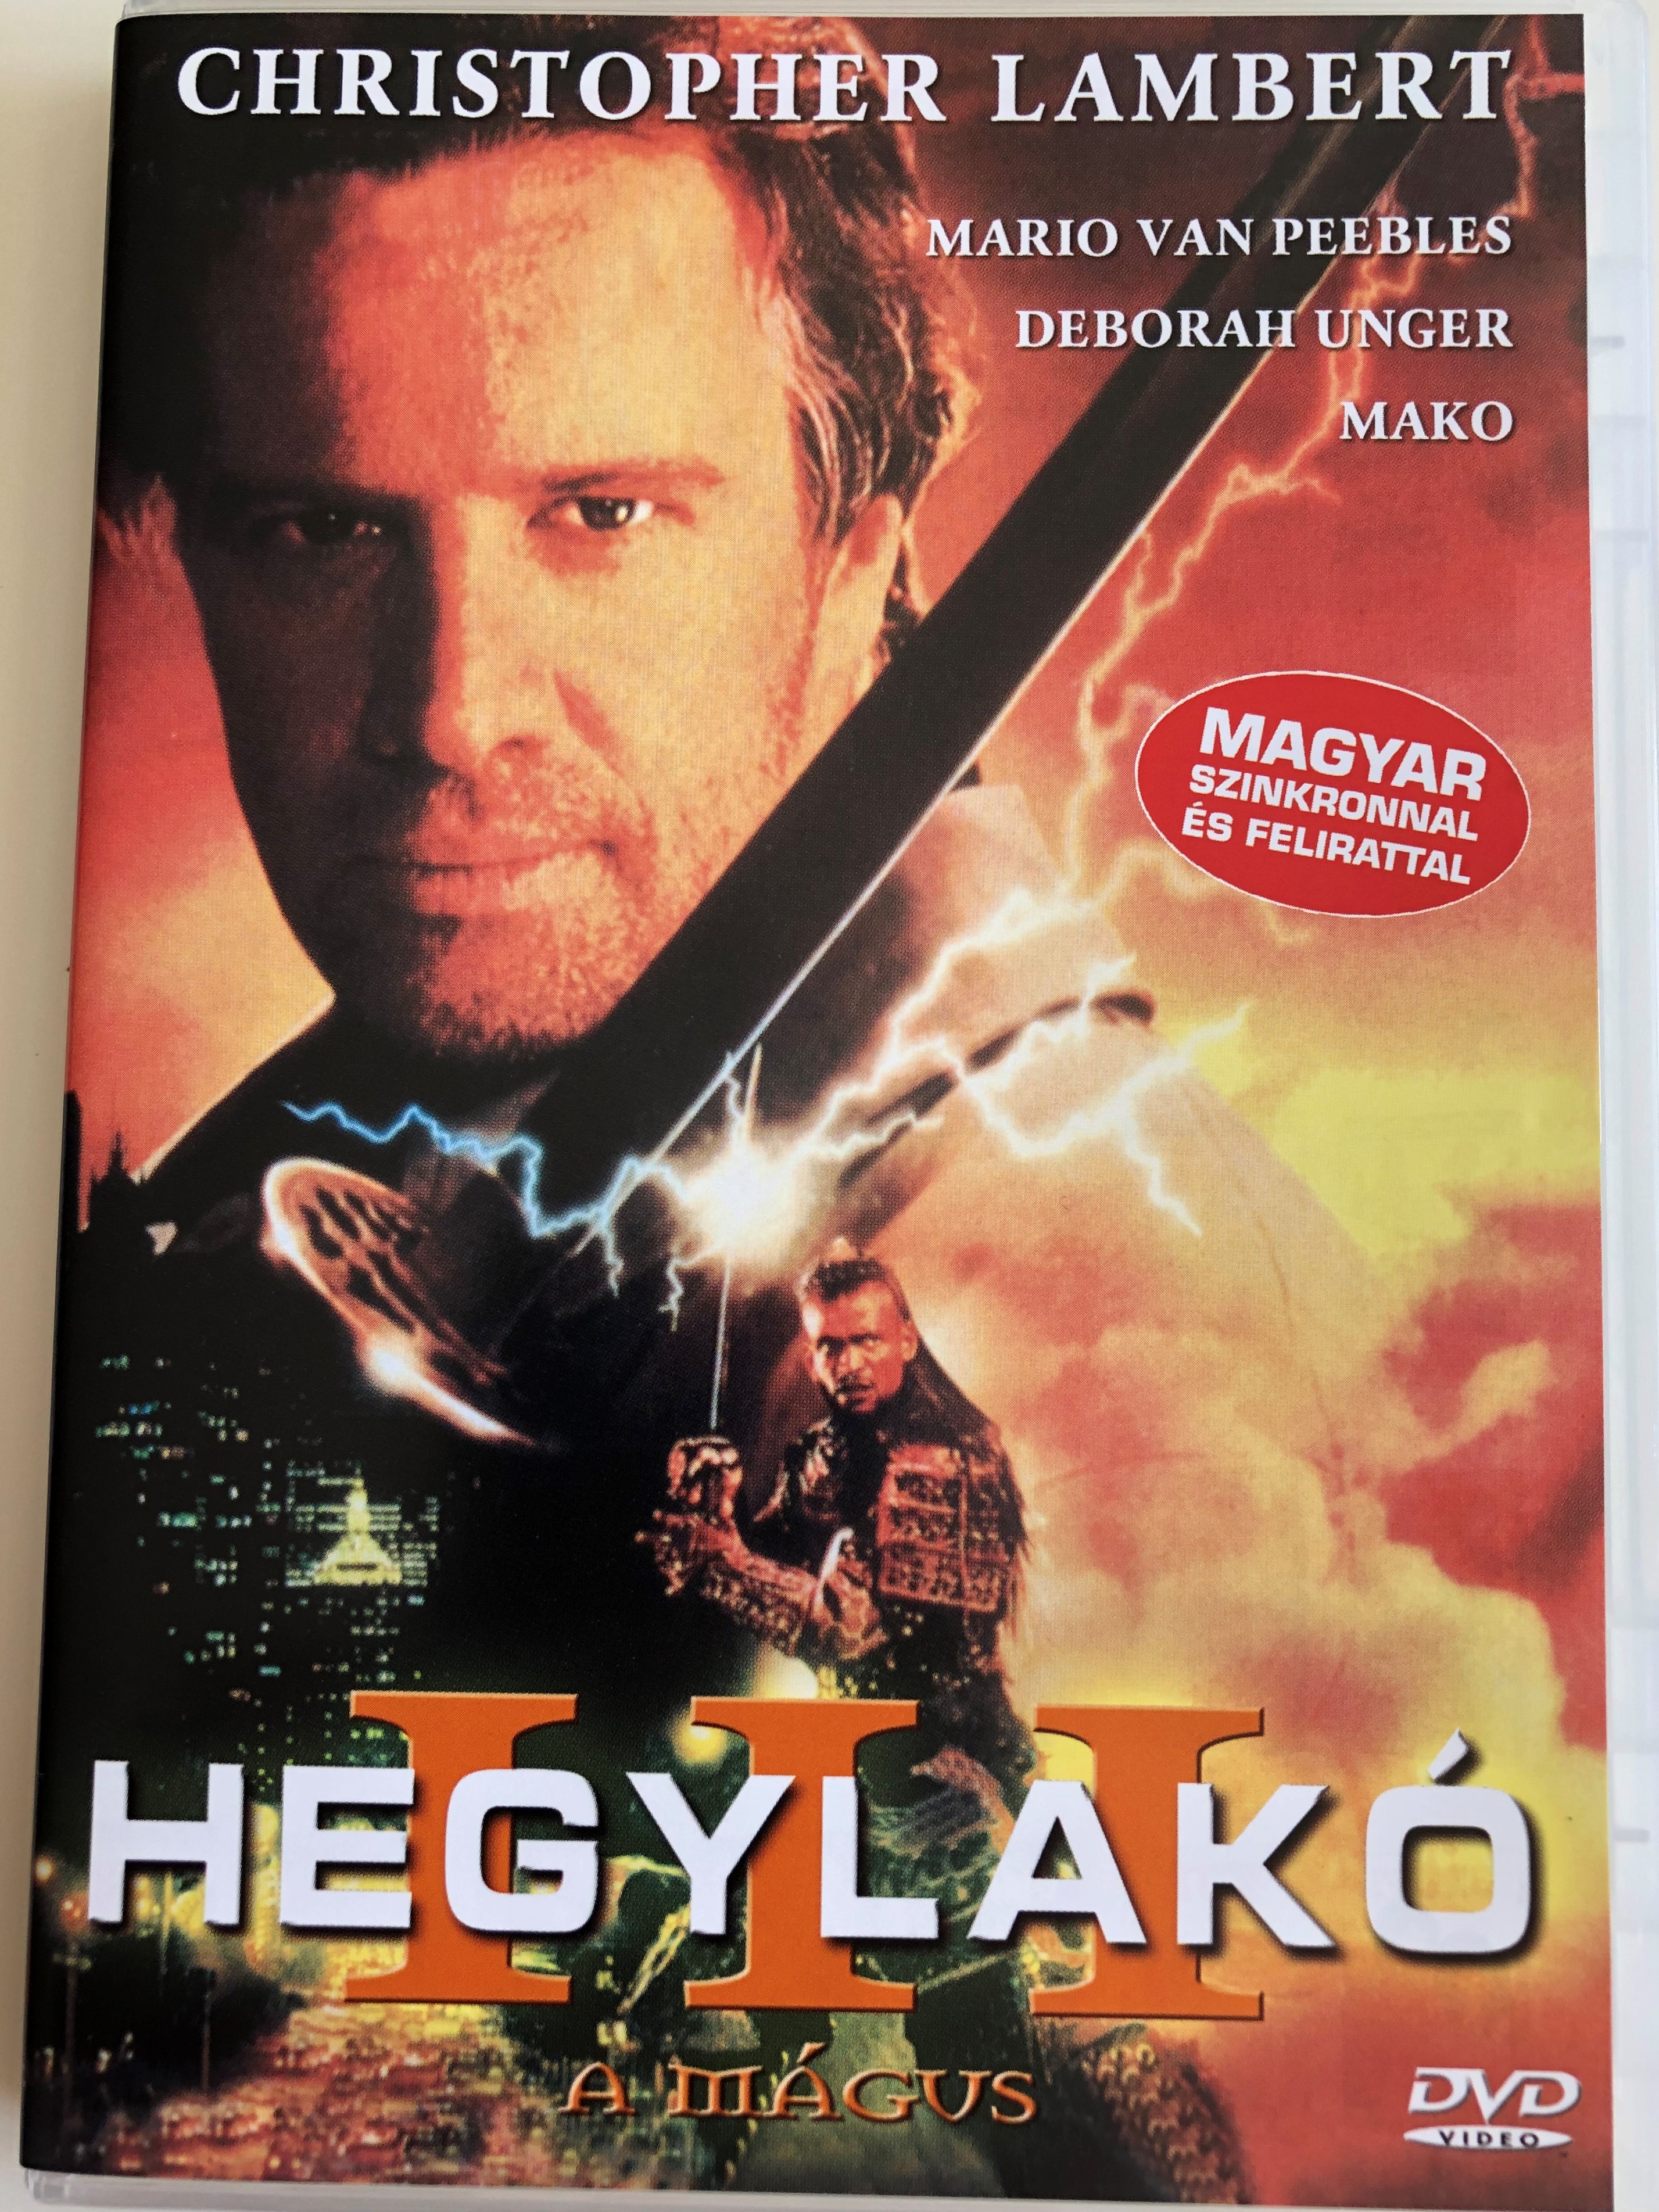 highlander-iii-the-sorcerer-dvd-1994-hegylak-3.-a-m-gus-directed-by-andrew-morahan-starring-christopher-lambert-mario-van-peebles-deborah-unger-hungarian-voiceover-and-subtitles-1-.jpg